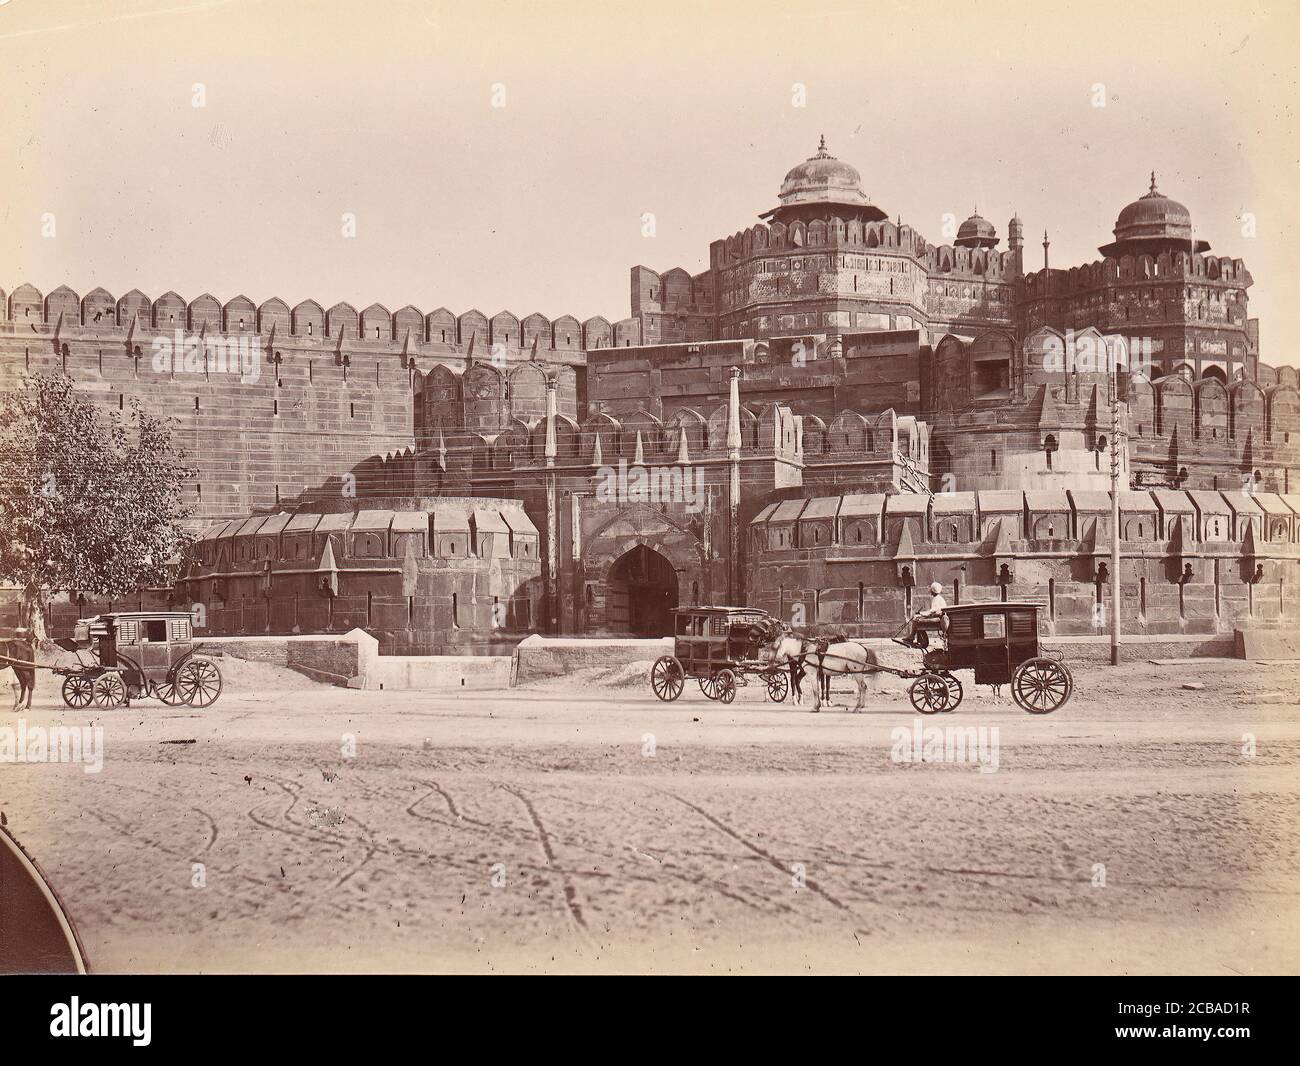 Red Fort, Delhi, India, 1860s-70s. Stock Photo